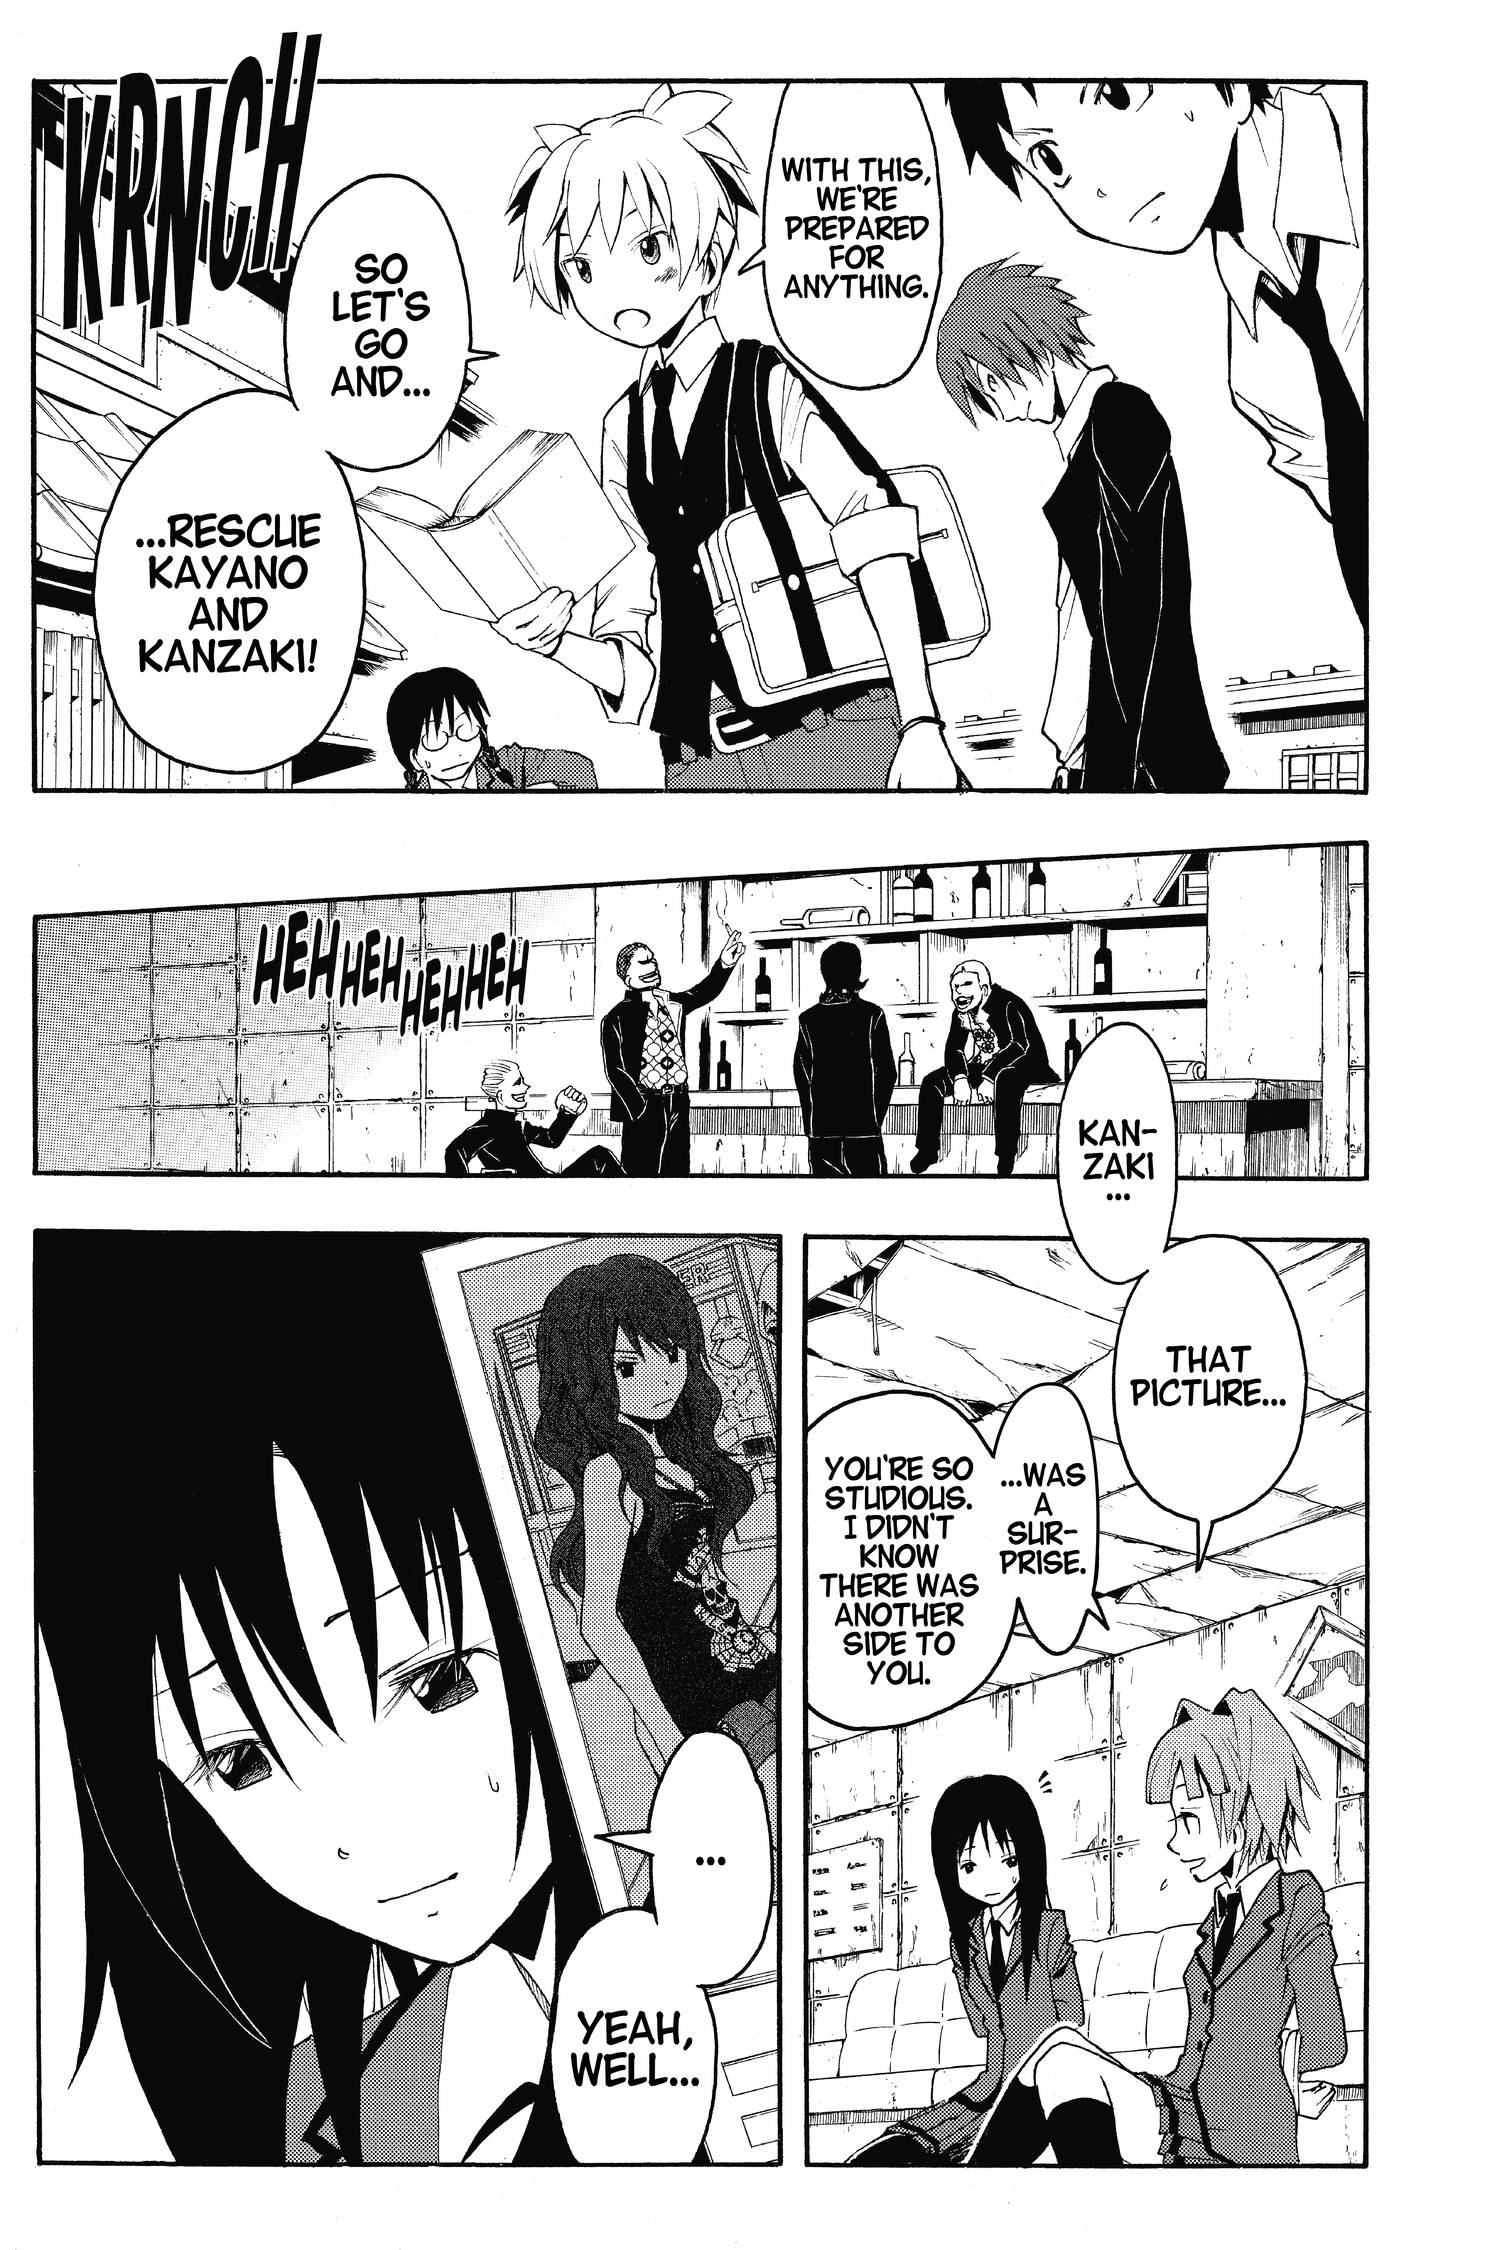 Assassination Classroom (Manga) - TV Tropes